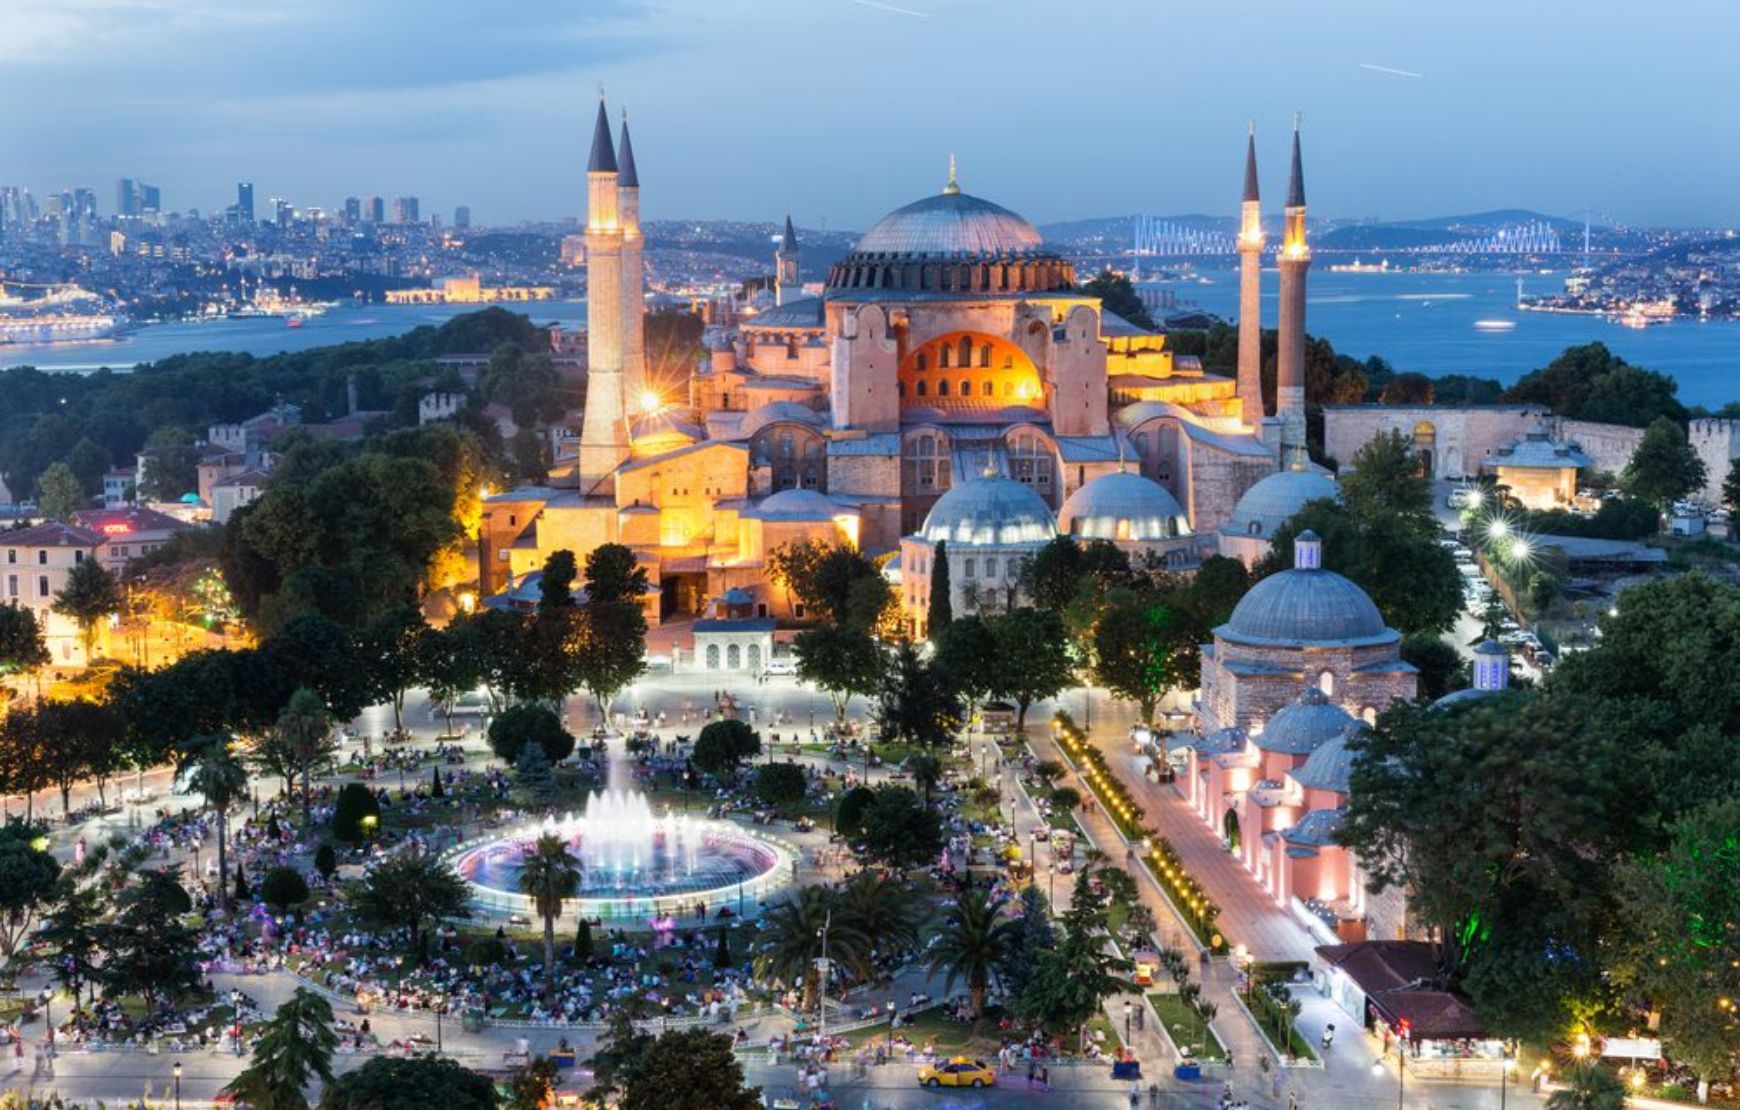 Aerial view of Hagia Sophia Turkey